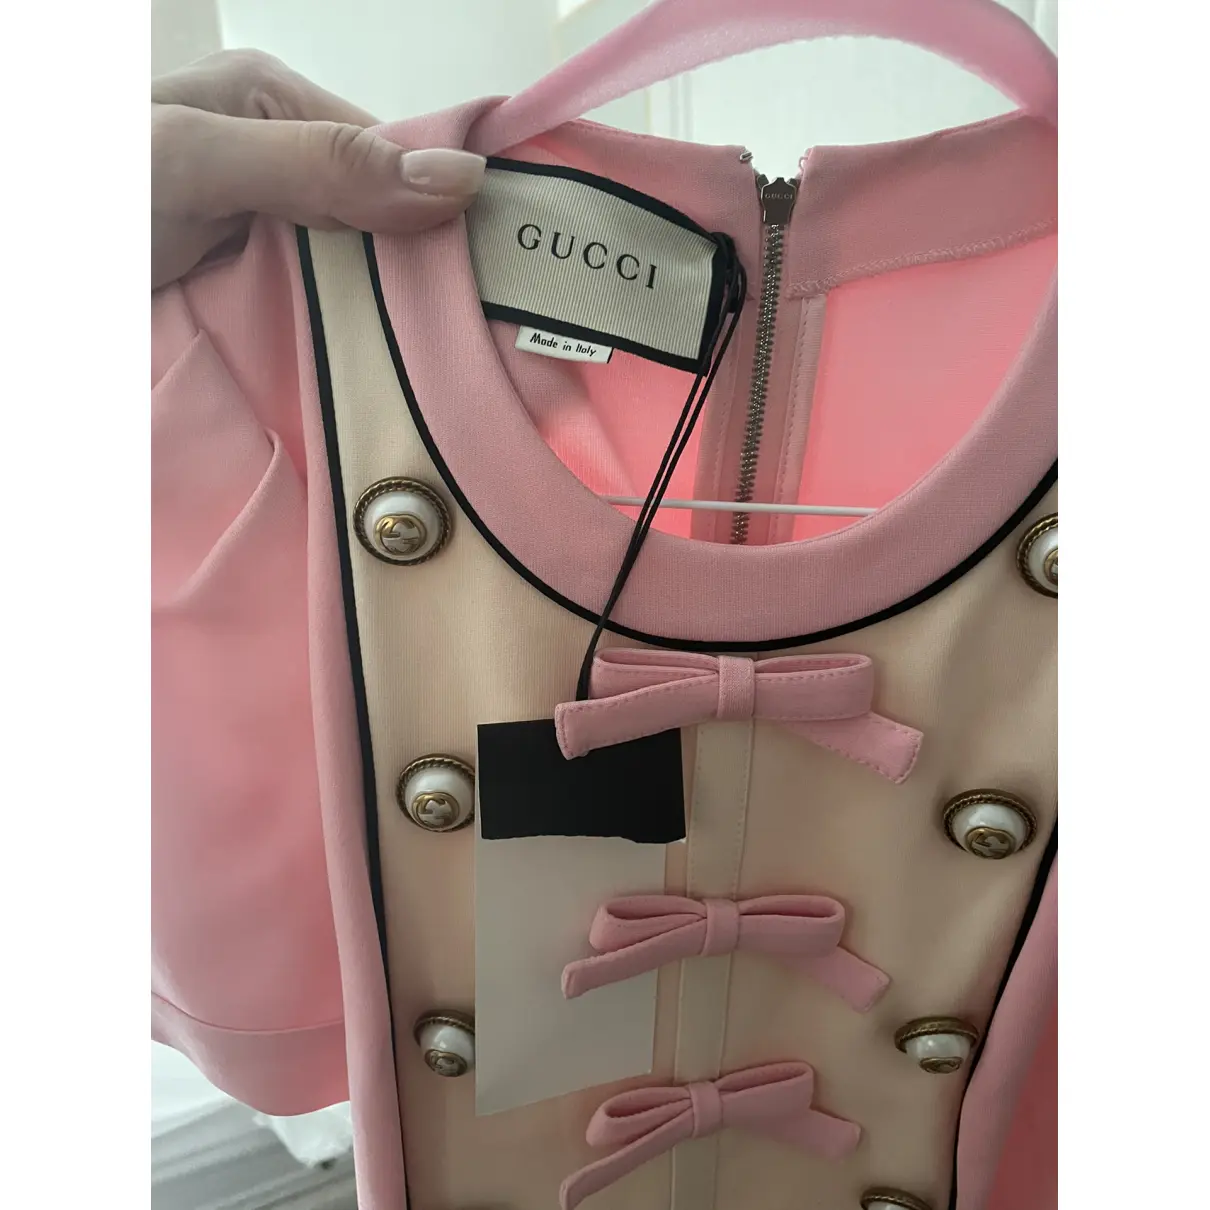 Luxury Gucci Dresses Women